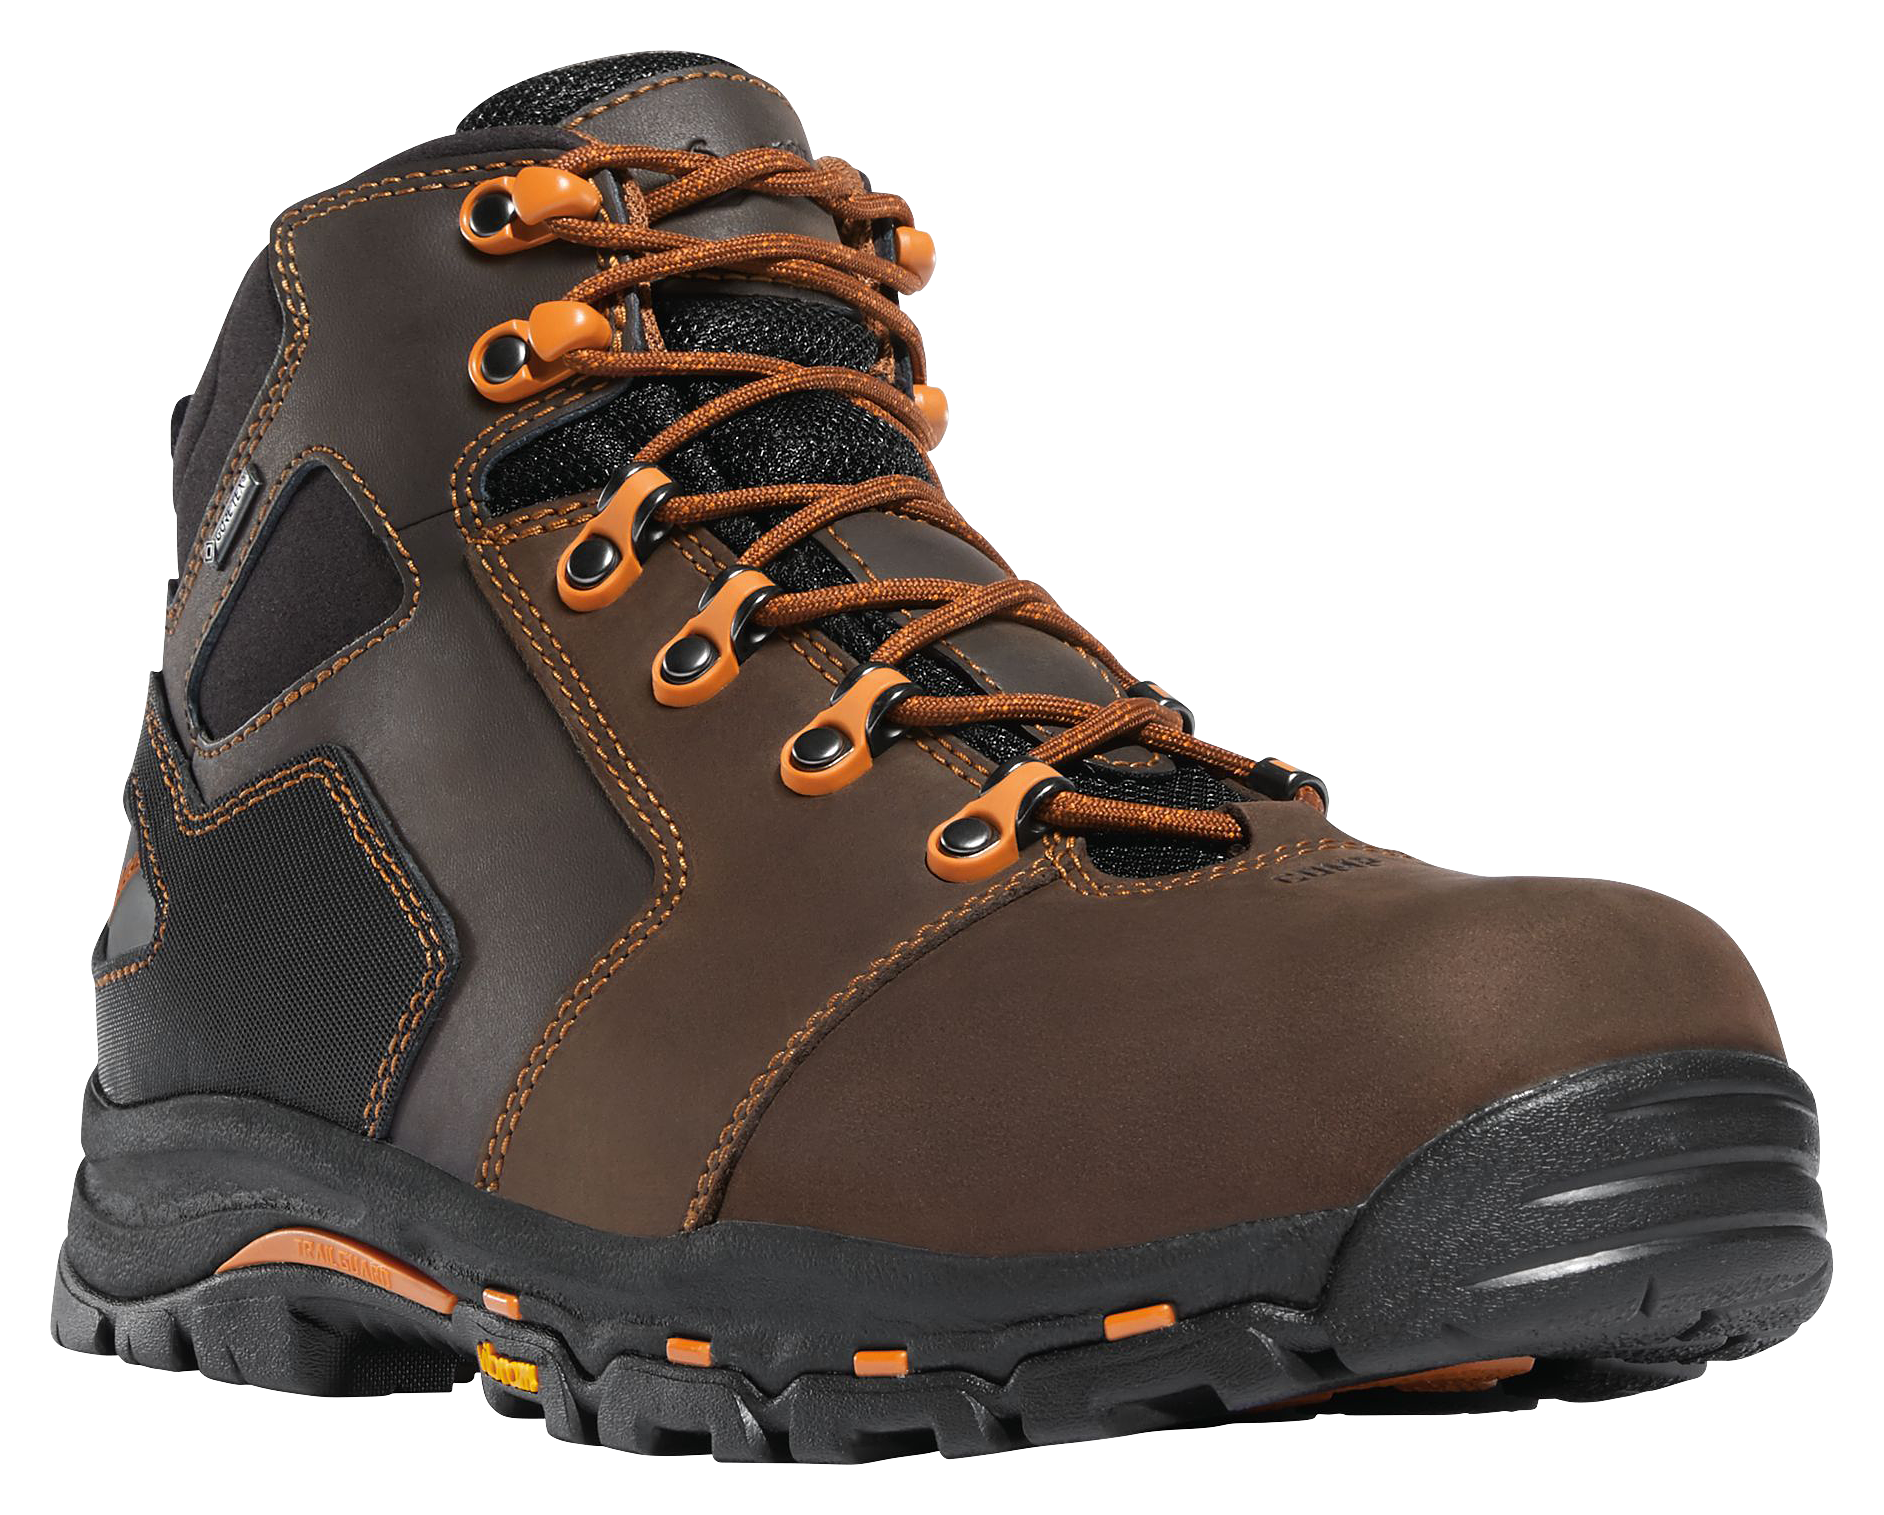 Danner Vicious 4.5'' GORE-TEX EH Work Boots for Men - Brown/Orange - 10.5W